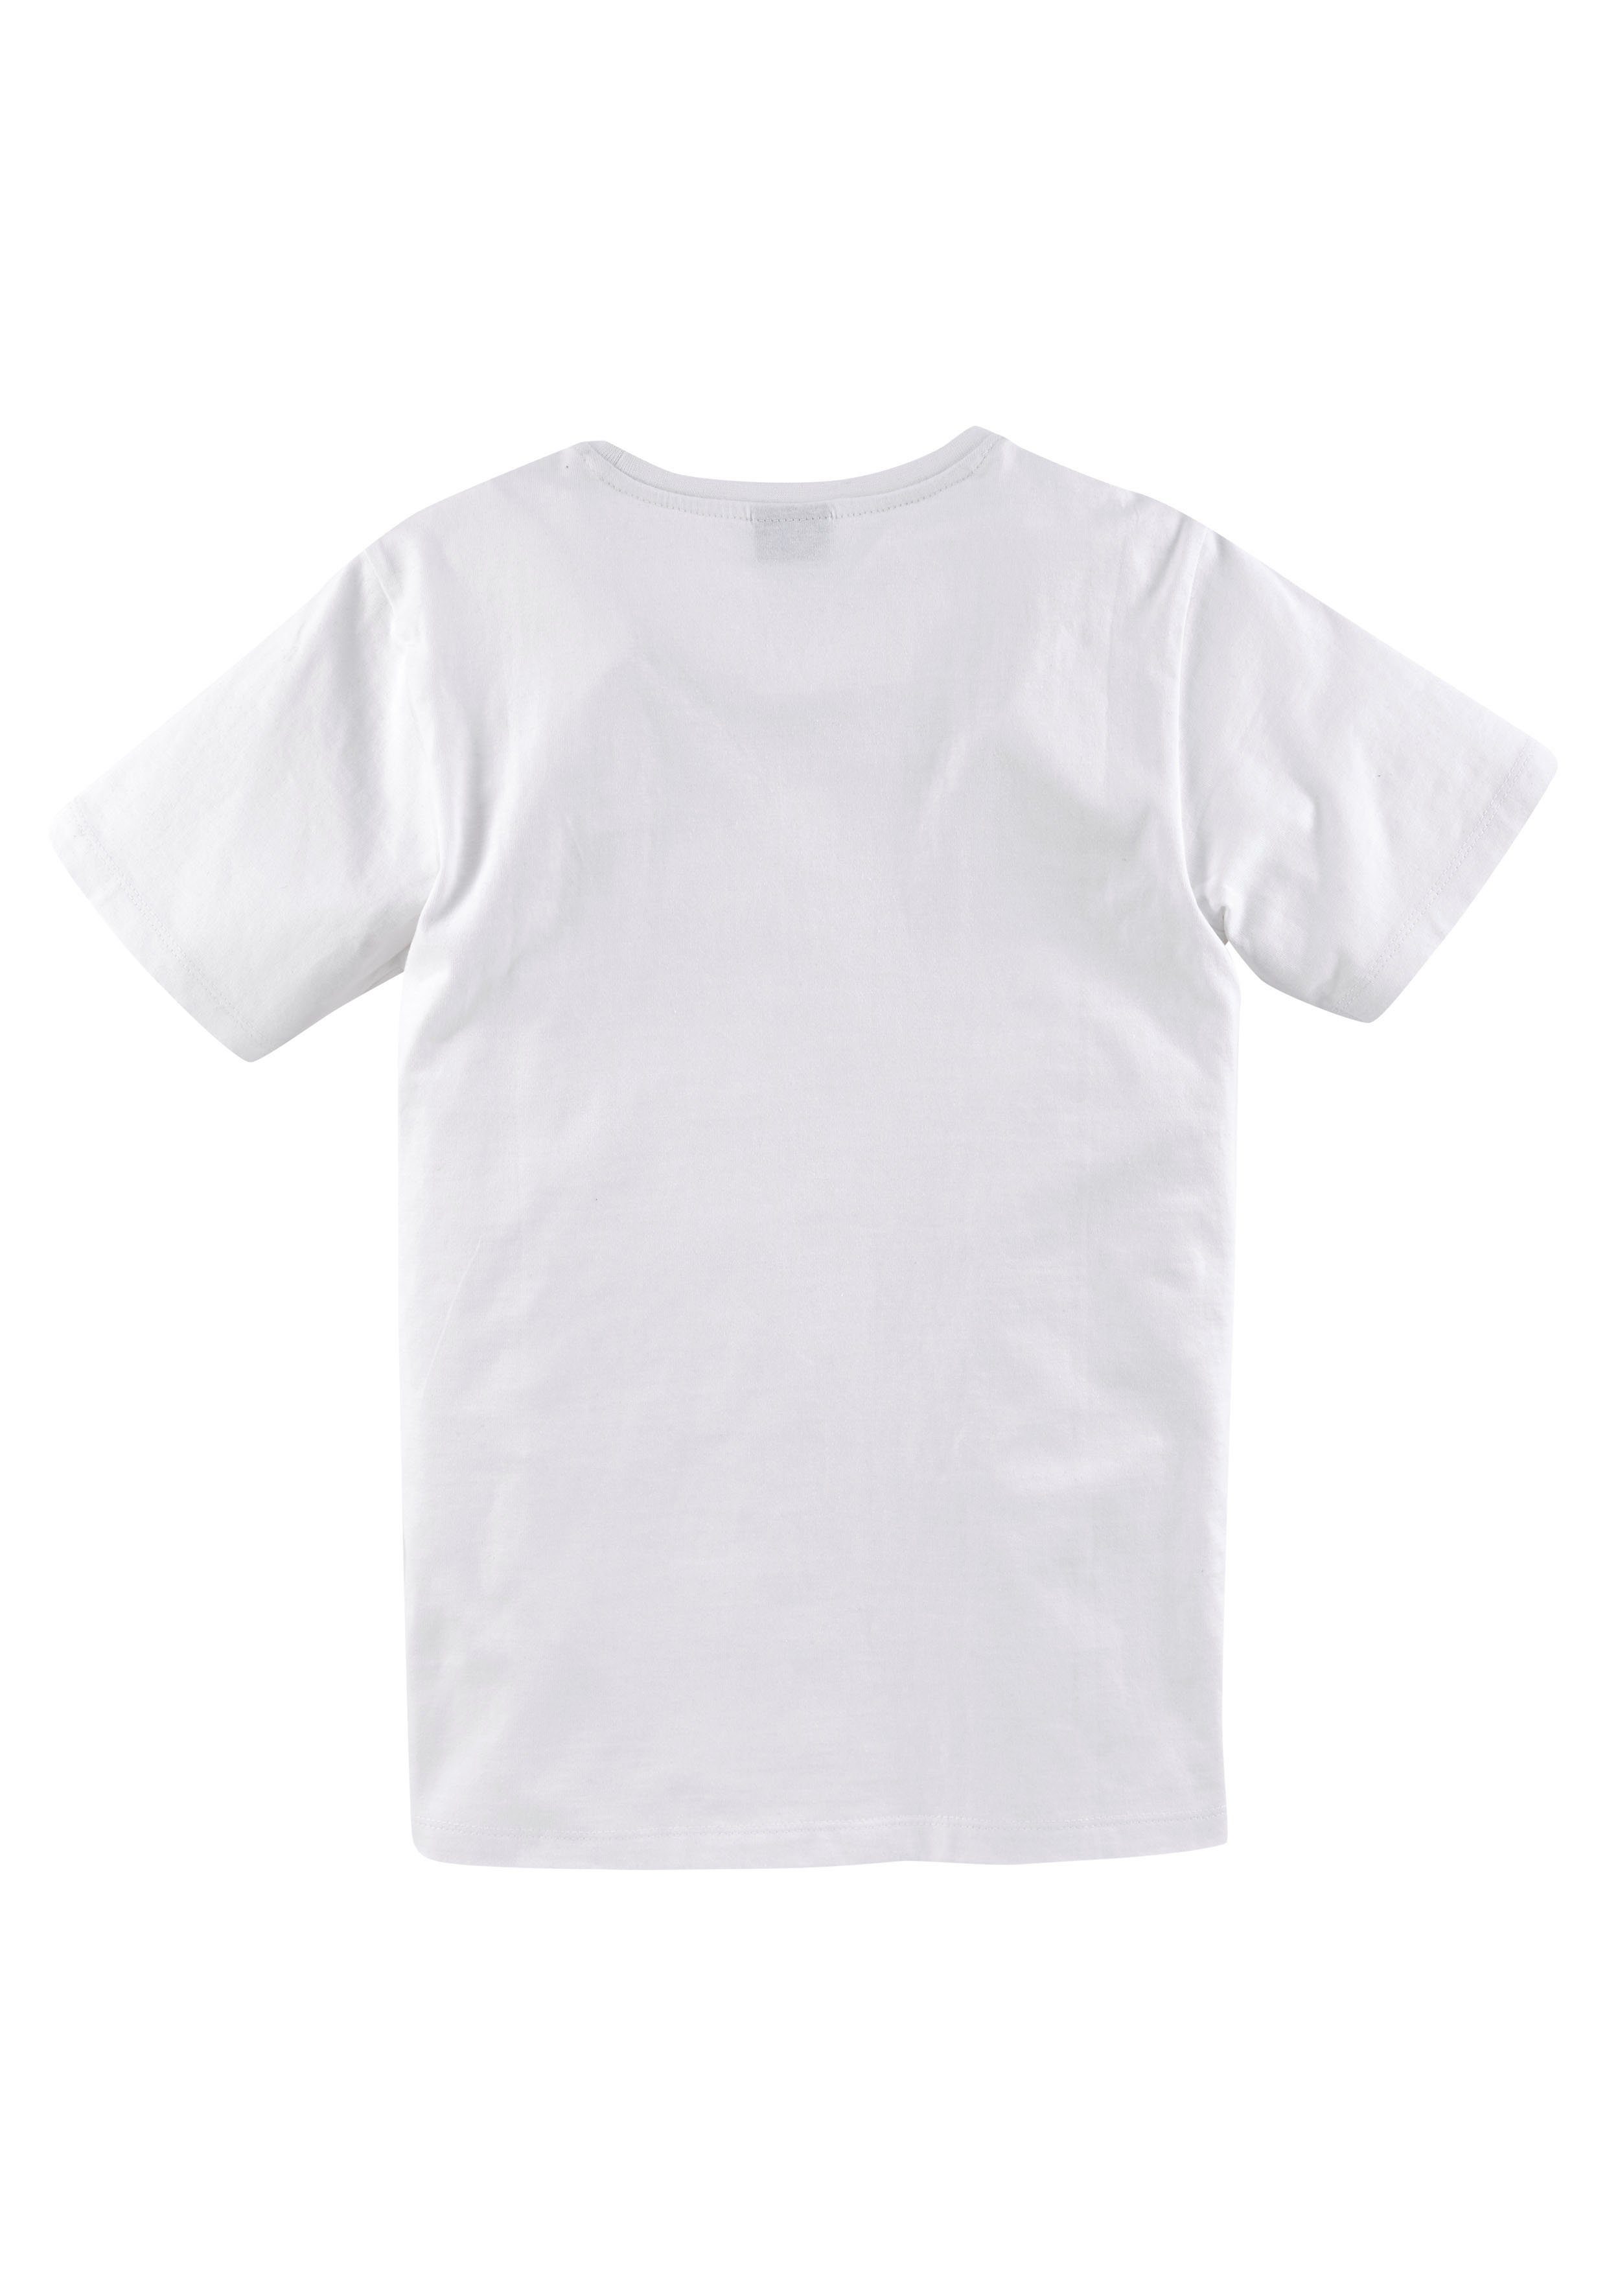 KIDSWORLD ZONE, GAMING Spruch T-Shirt